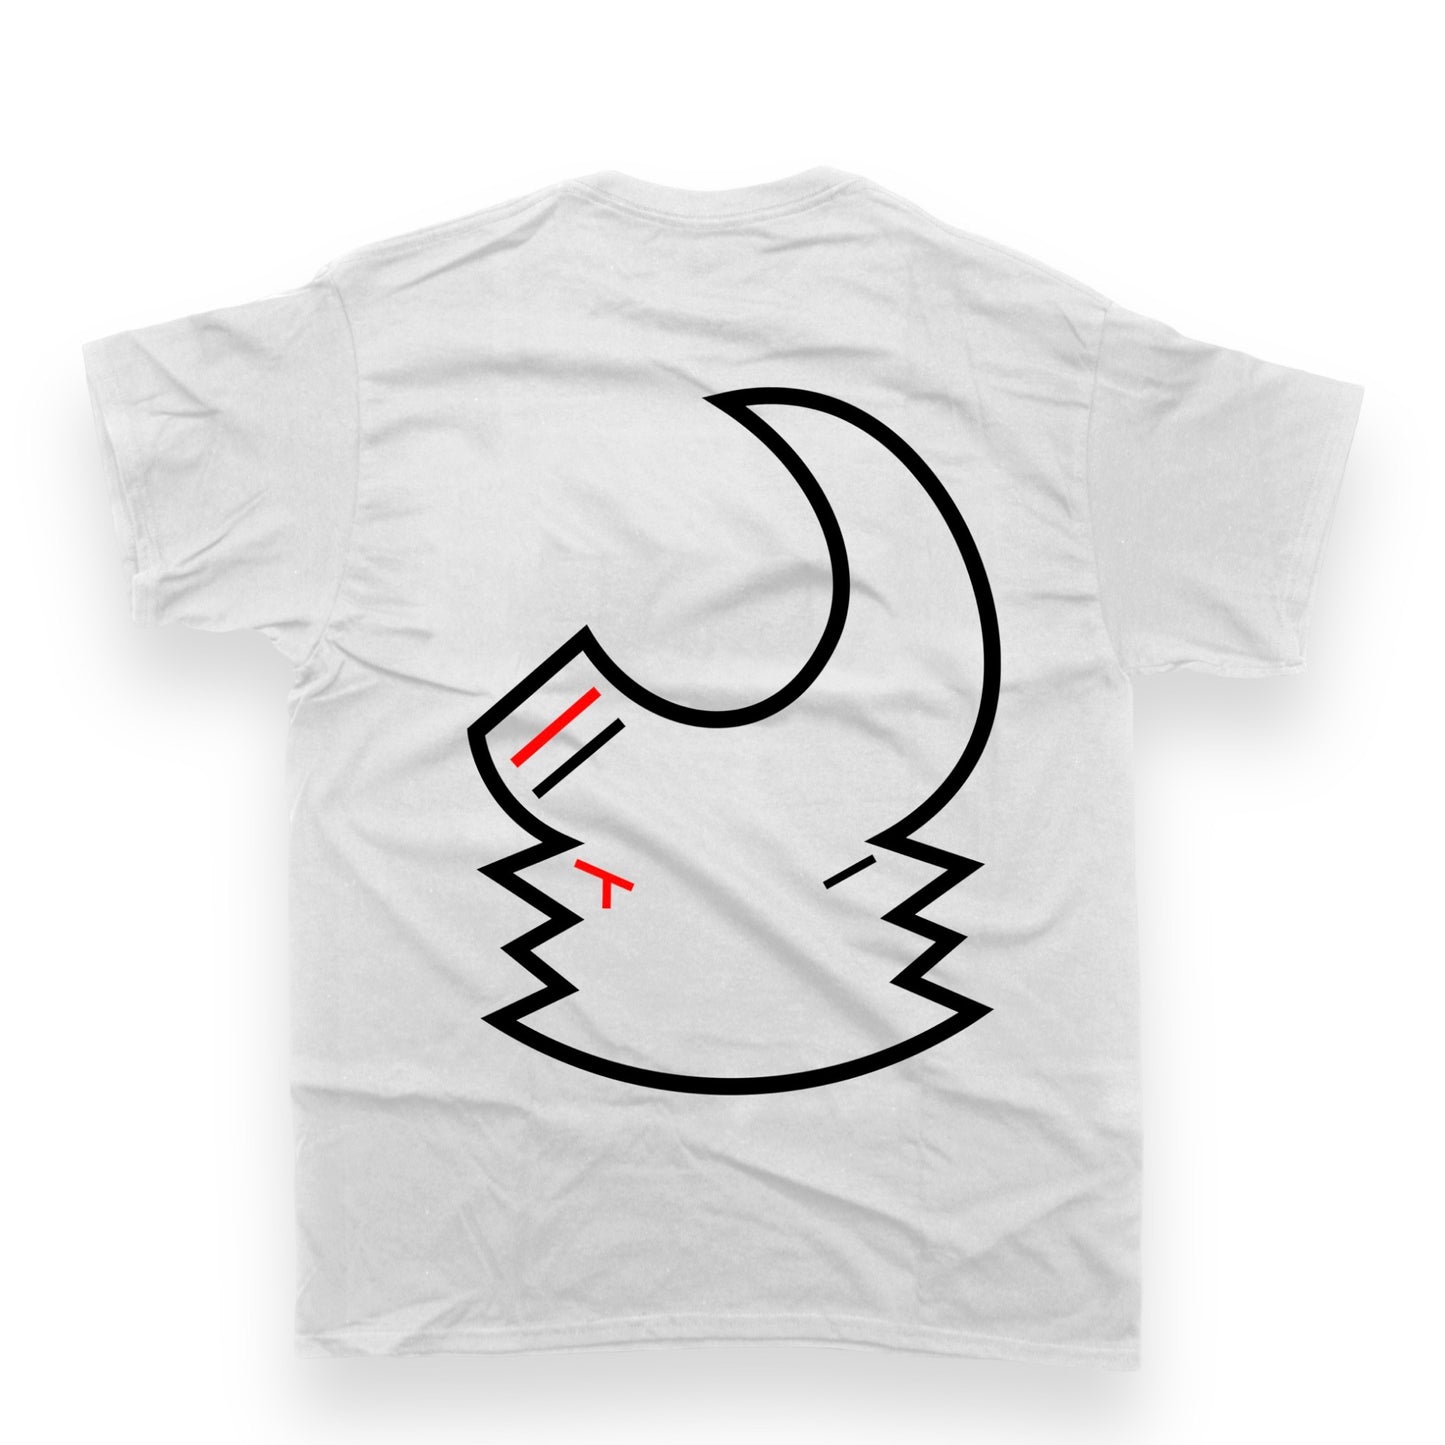 Unisex Silver T Shirt